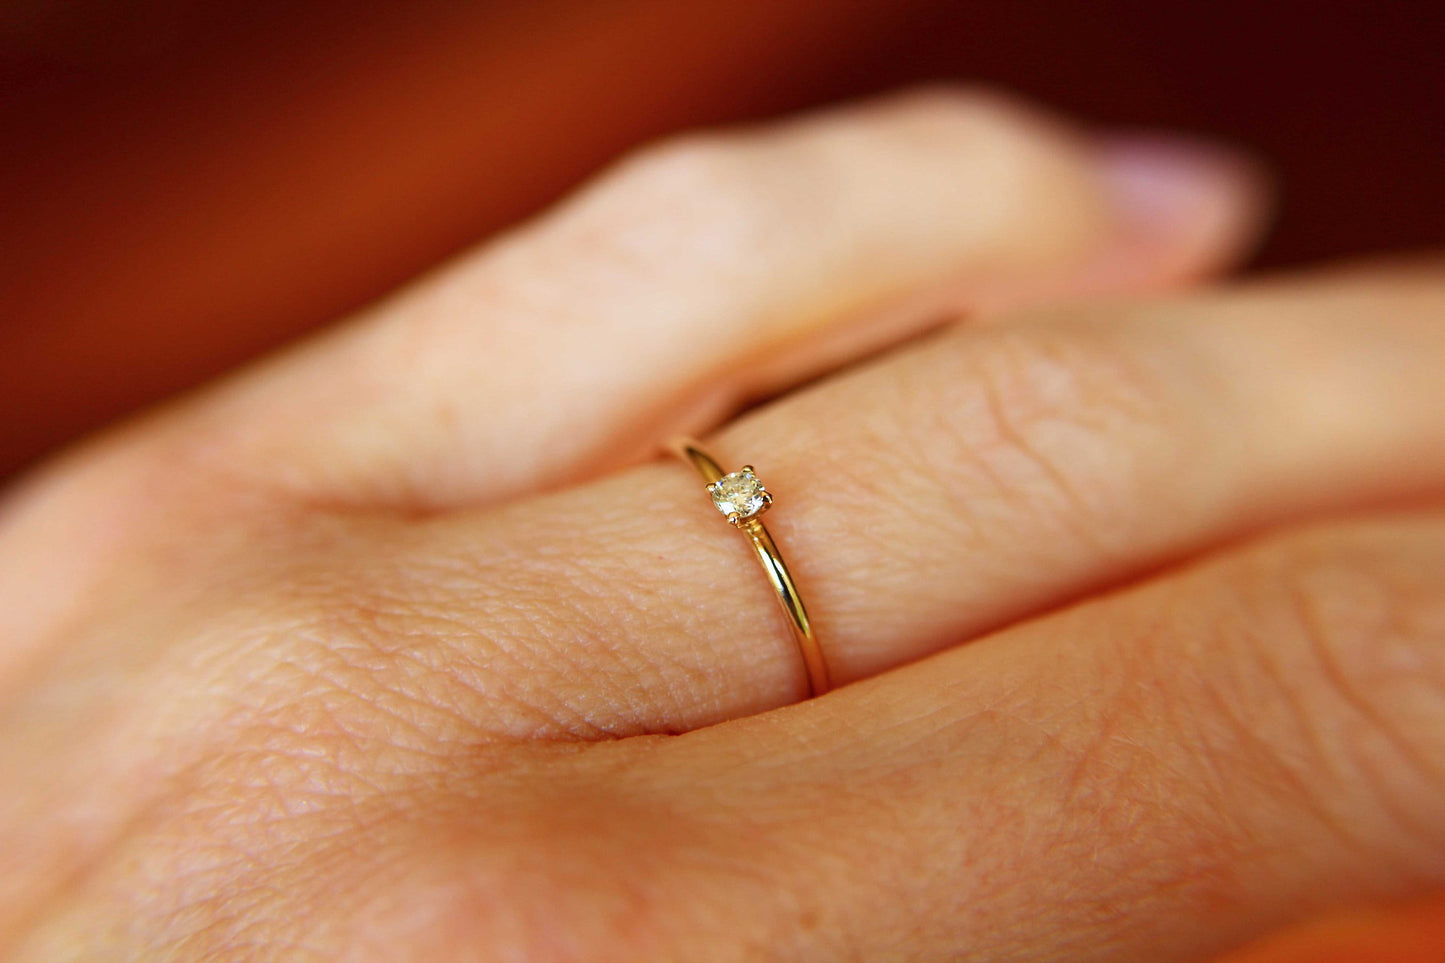 Diamond Ring, Genuine White Diamond Ring, White Diamond, Simple Diamond Ring, Minimal, Gift, April Birthstone Ring, Gold Diamond Ring, Gift